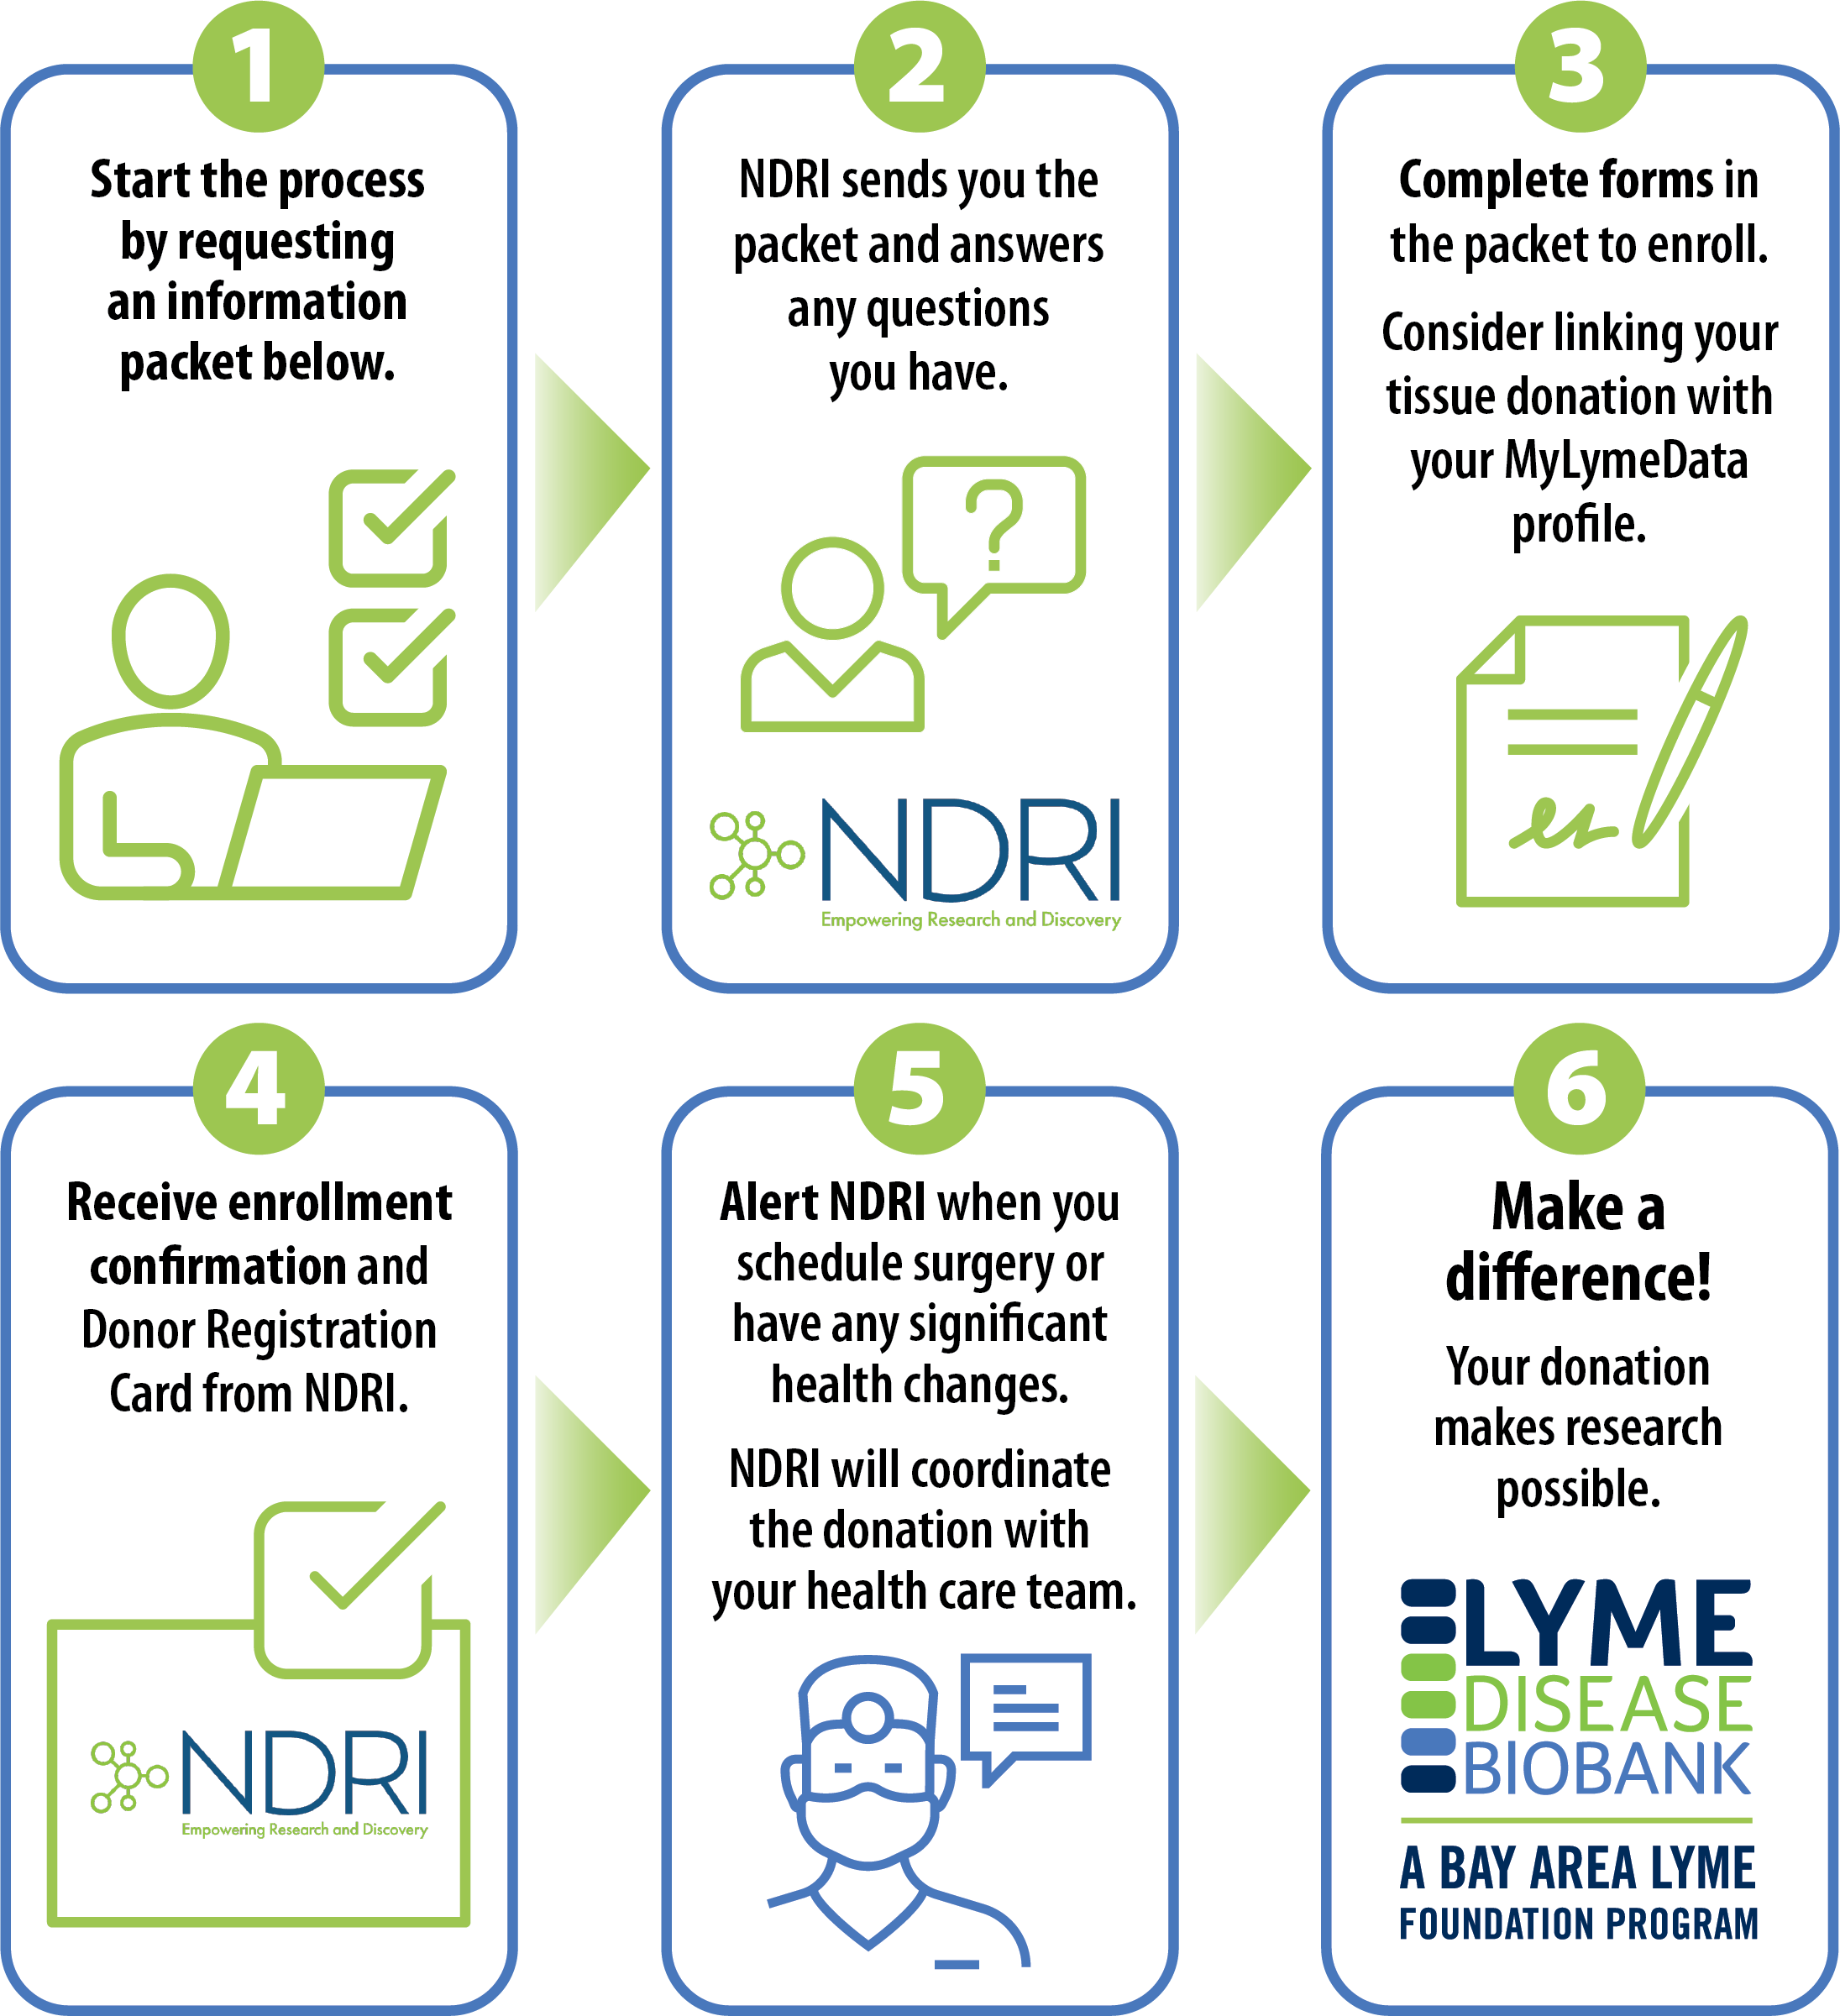 Lyme Disease Biobank Tissue donation process